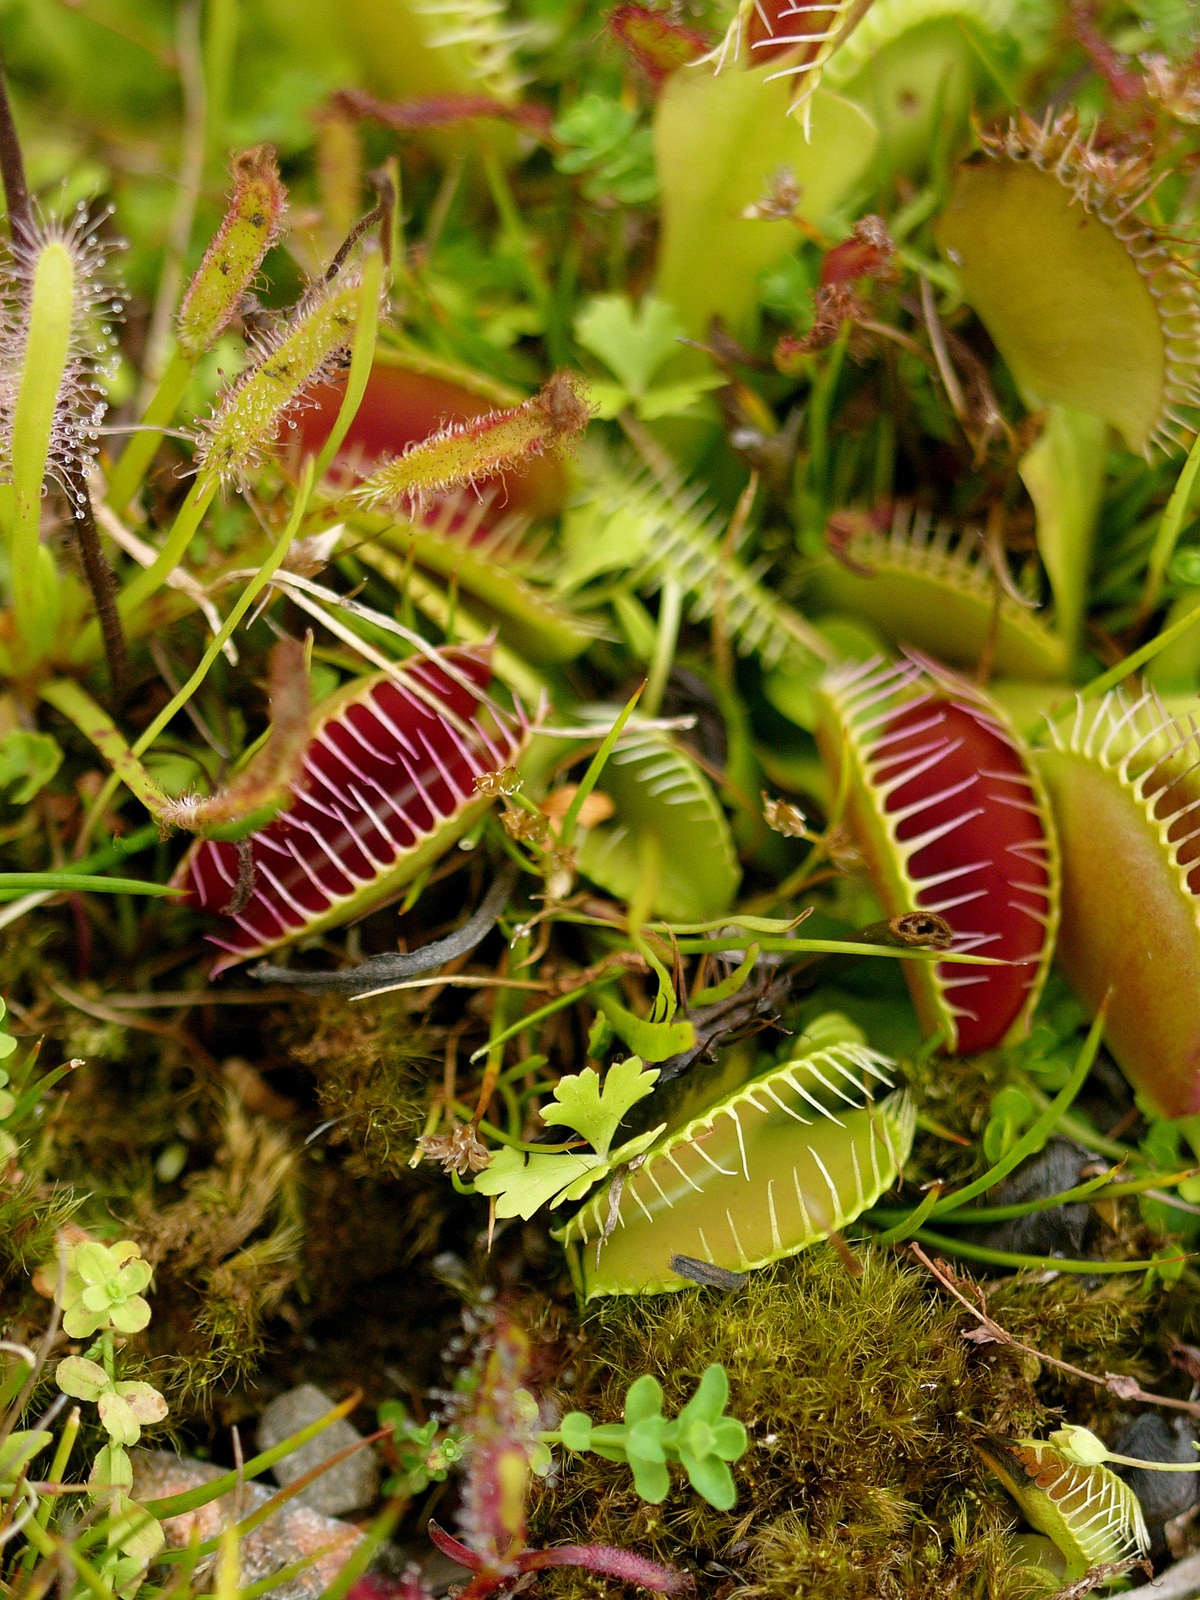 Dionaea Muscipula